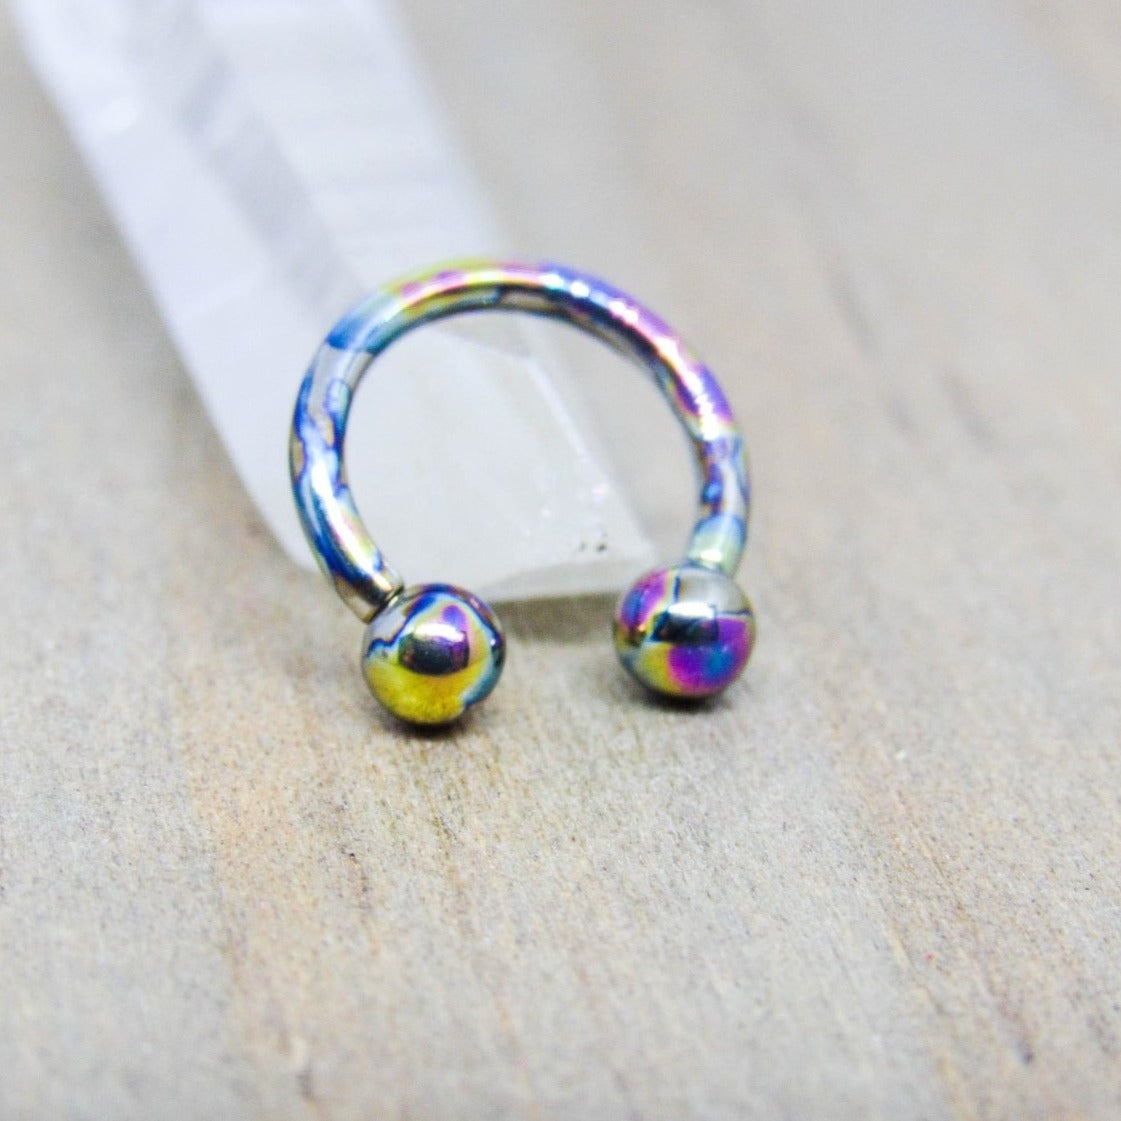 16g titanium anodized oilslick circular barbell piercing hoop ring